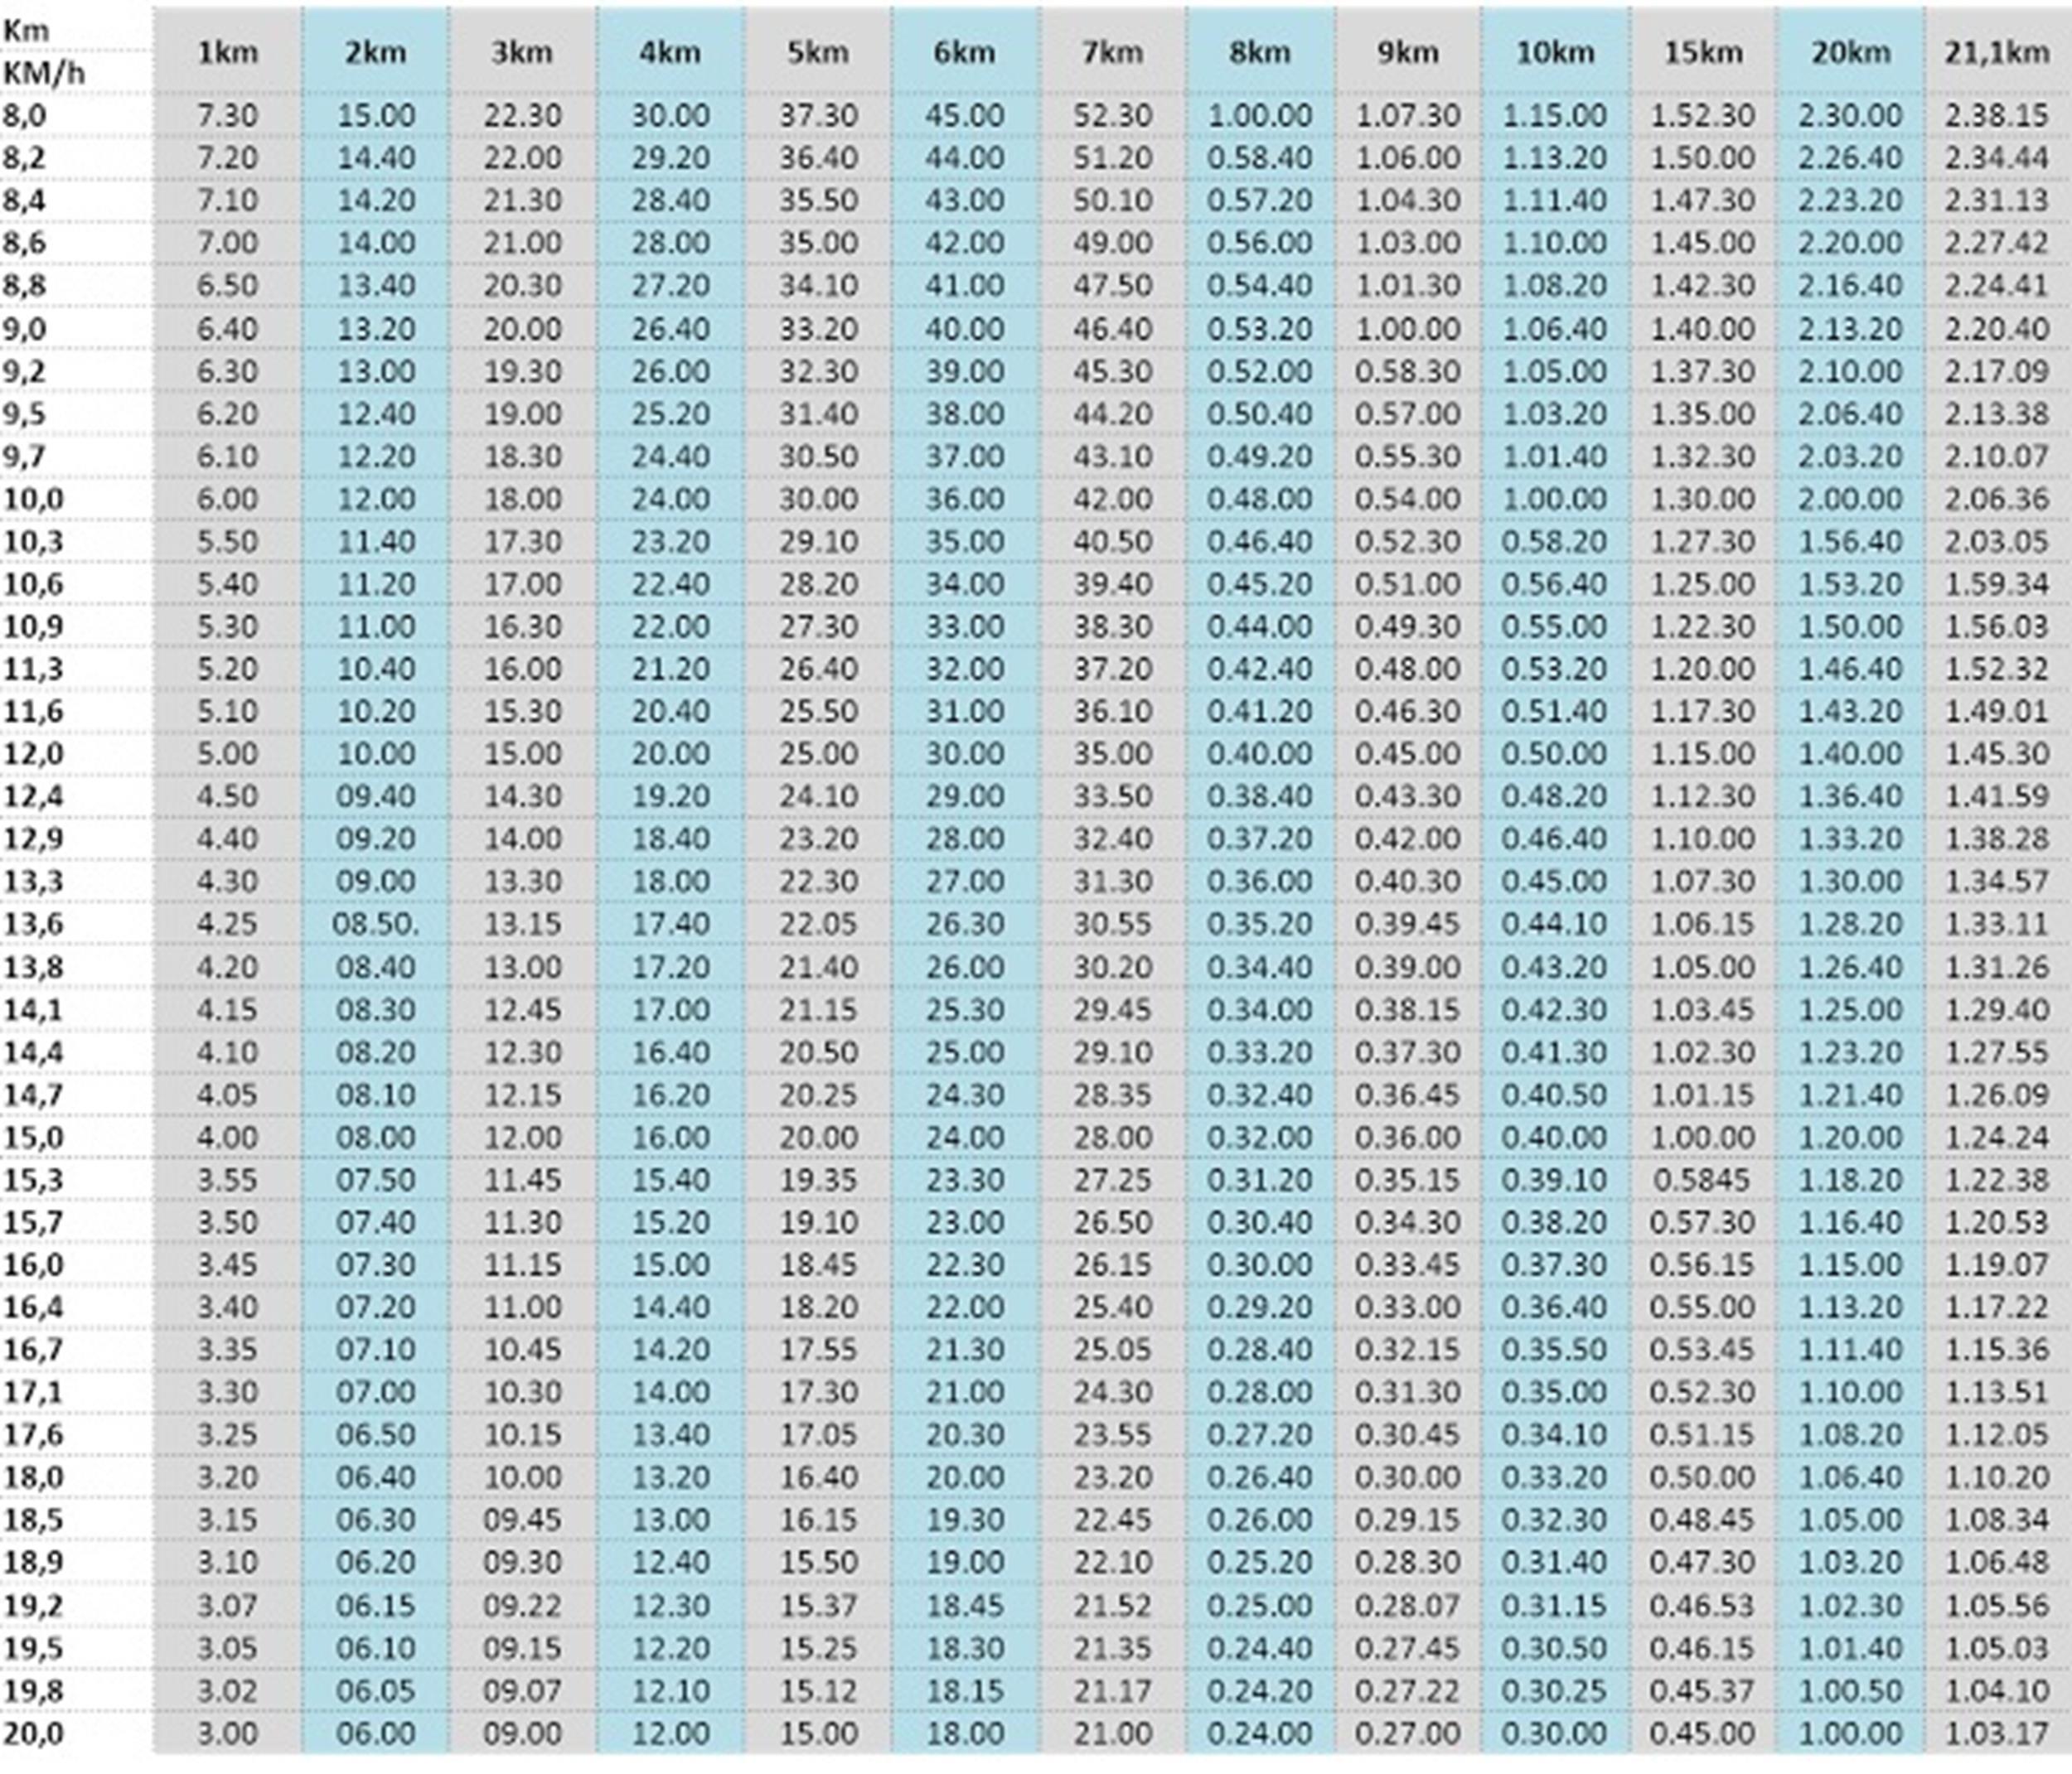 25-free-marathon-pace-charts-half-marathon-pace-chart